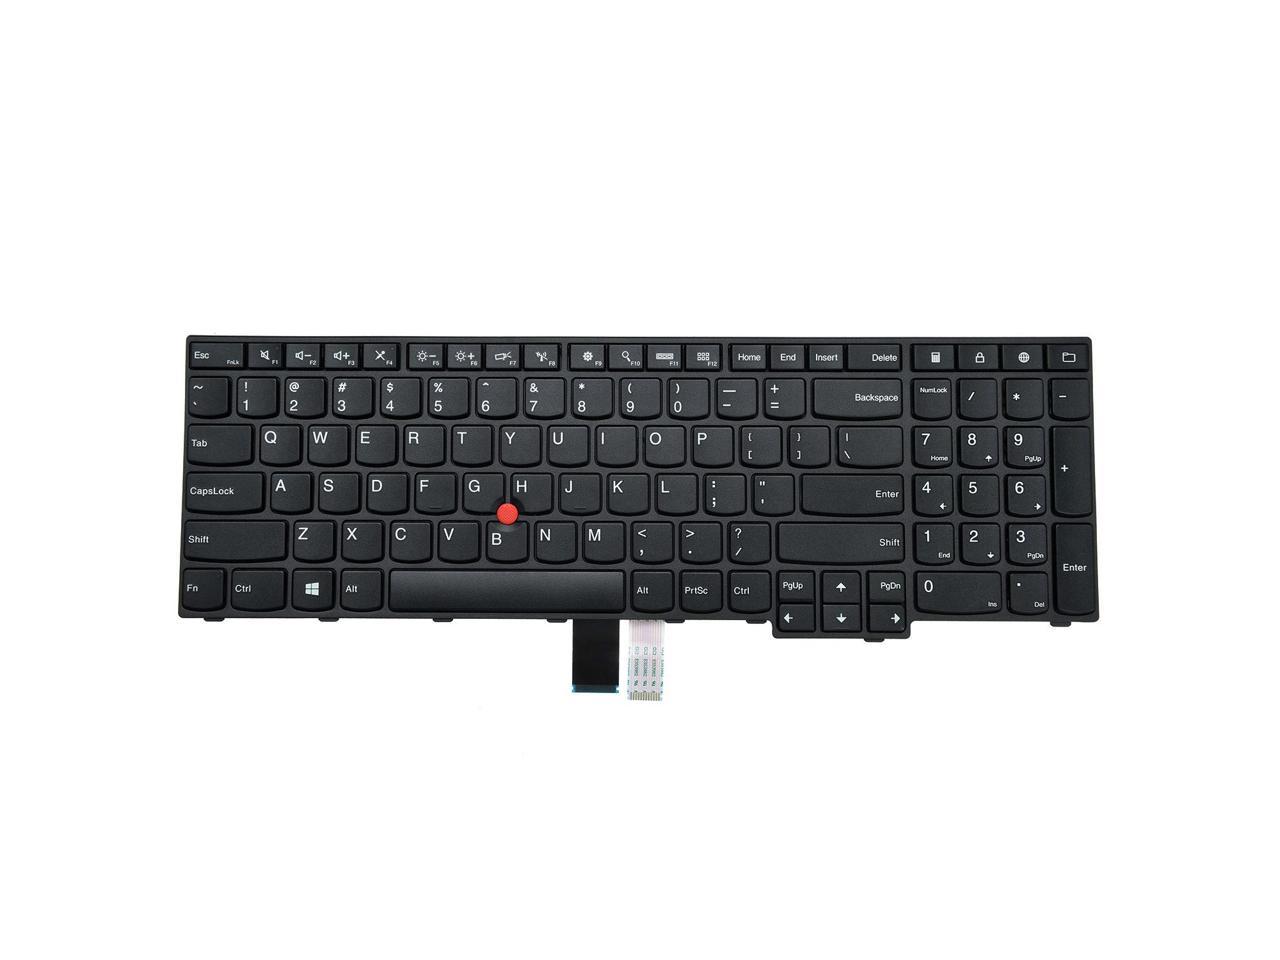 Afledning James Dyson redaktionelle AUTENS Replacement US Keyboard for Lenovo ThinkPad E550 E550c E555 E560  E565 Laptop No Backlight - Newegg.com